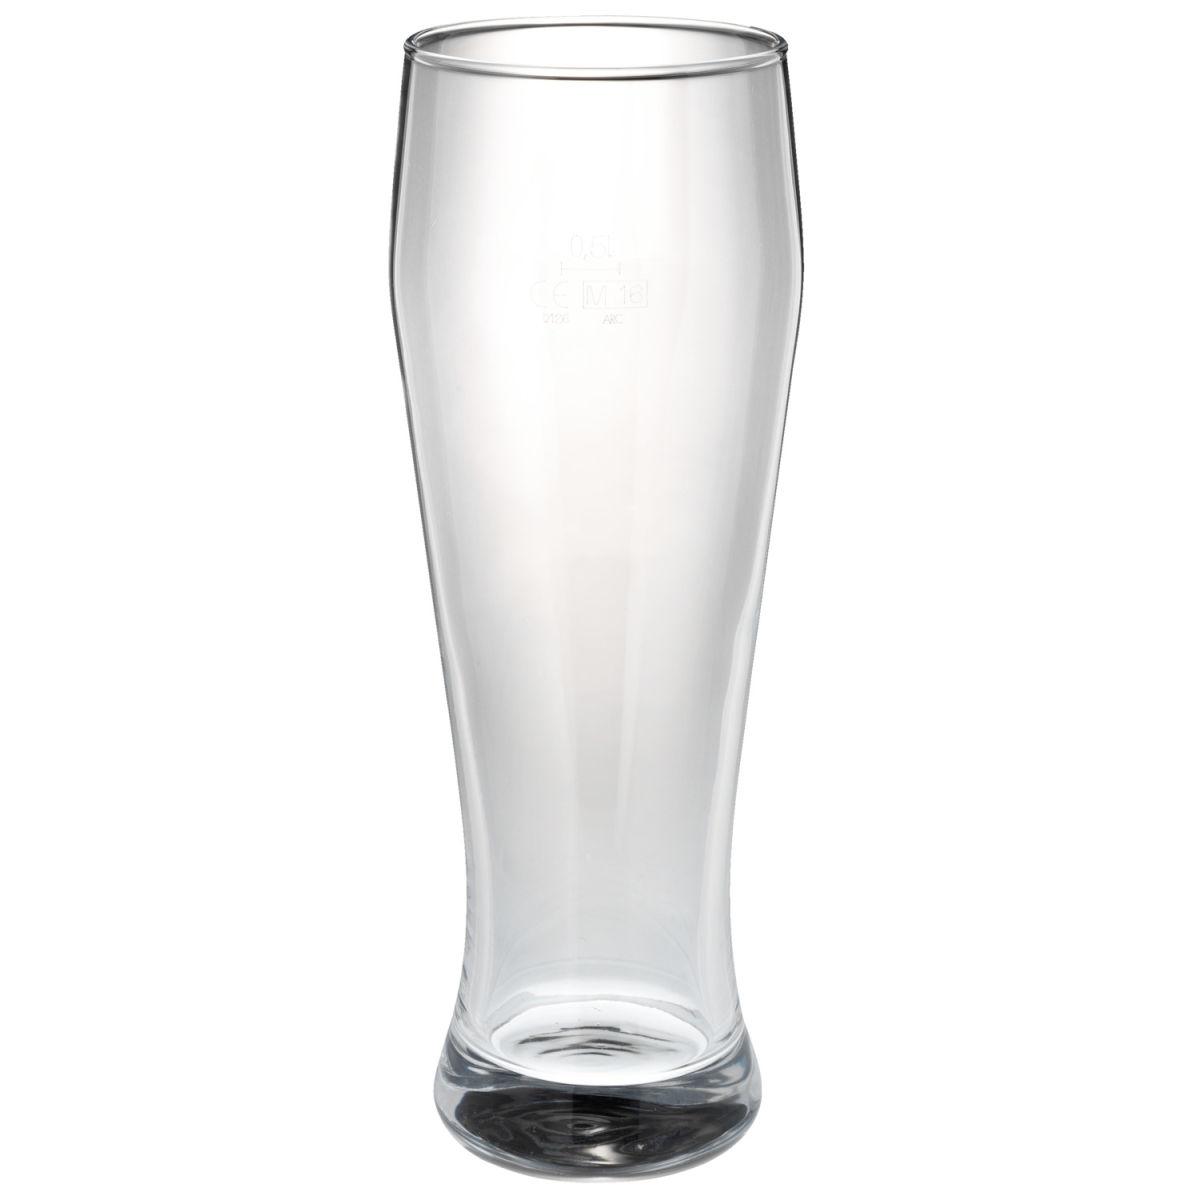 Vega Weizenbierglas Lauta; 665ml, 8.4x23.4 cm (ØxH); transparant; 0.5 l vulstreepje, 6 stuk / verpakking